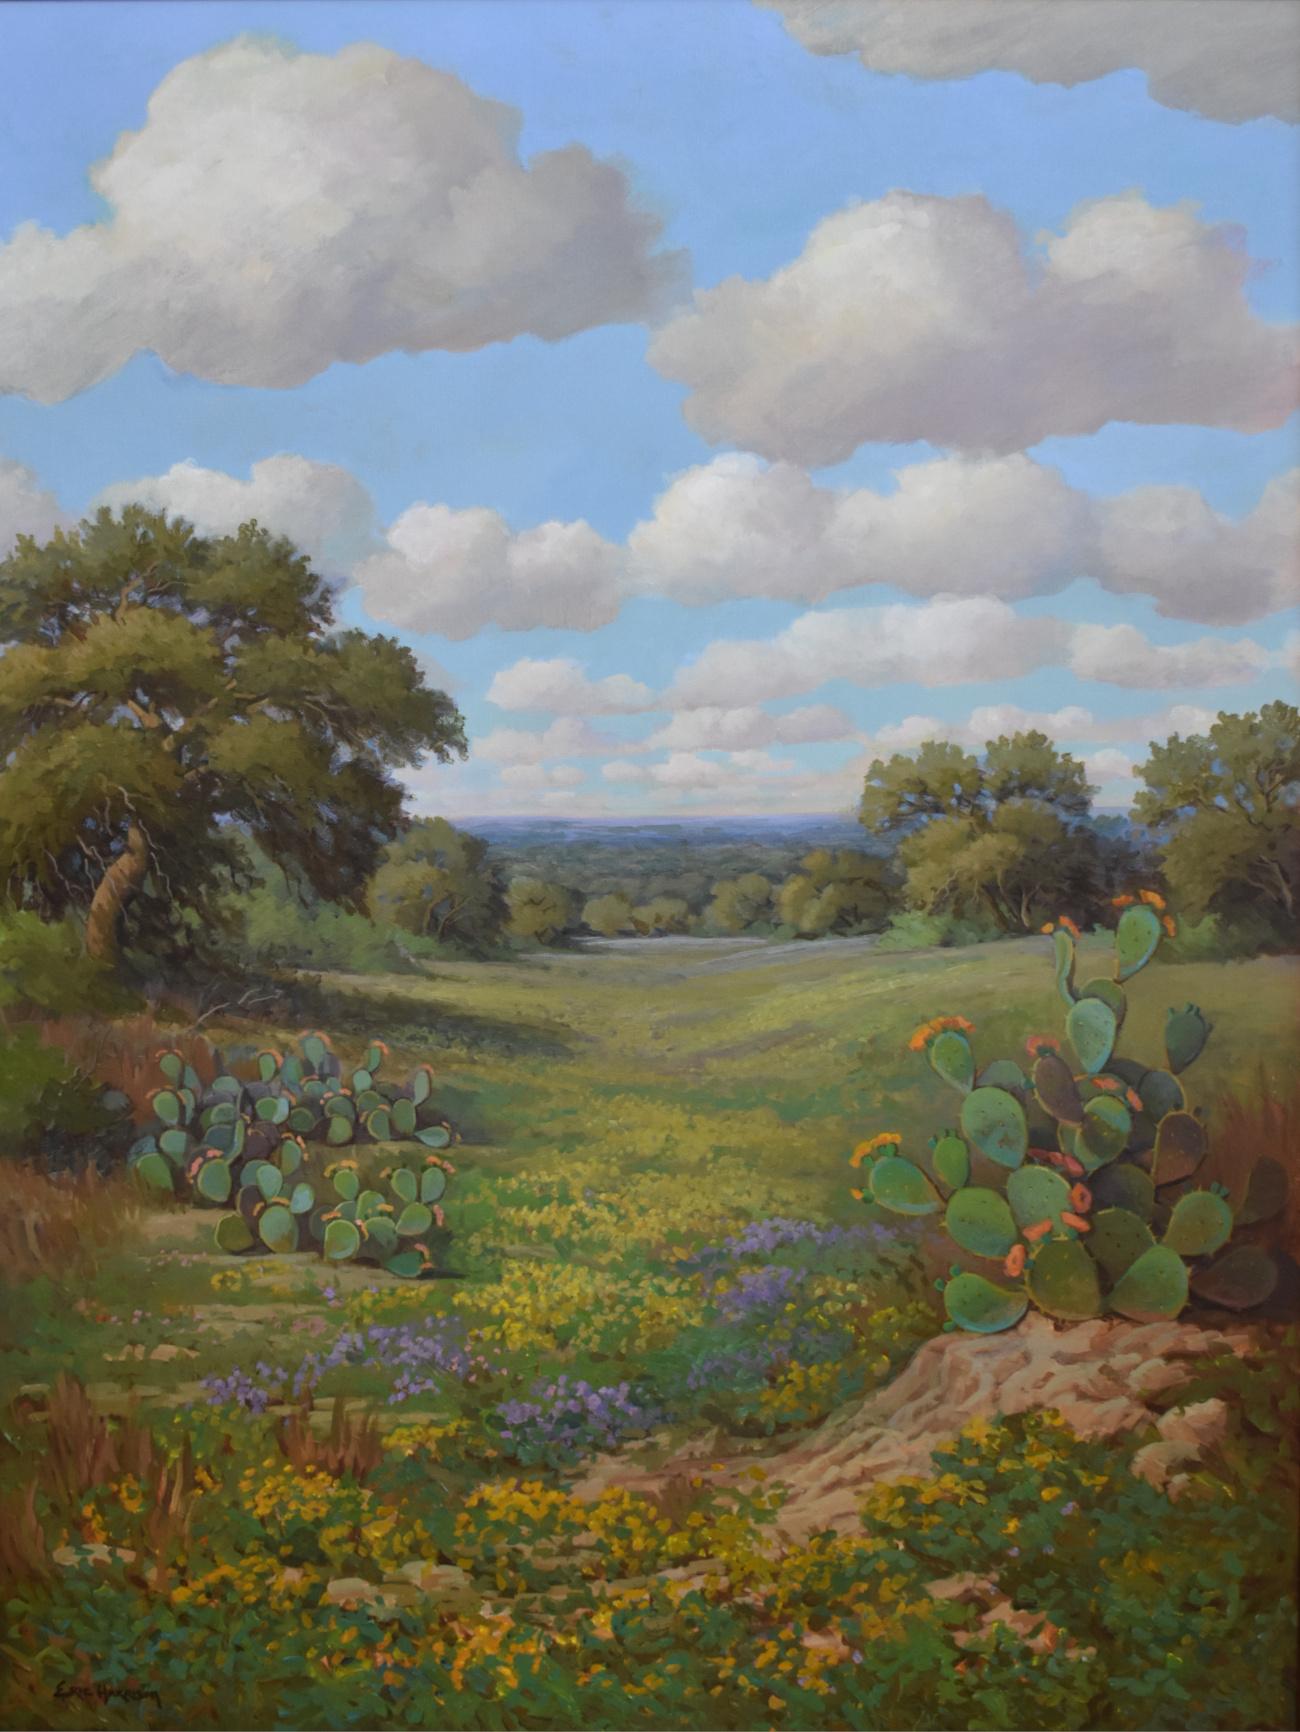  « Summer Splendor » Texas Hill Country Prickley Pear Cactus en fleurs sauvages - Painting de Eric Harrison